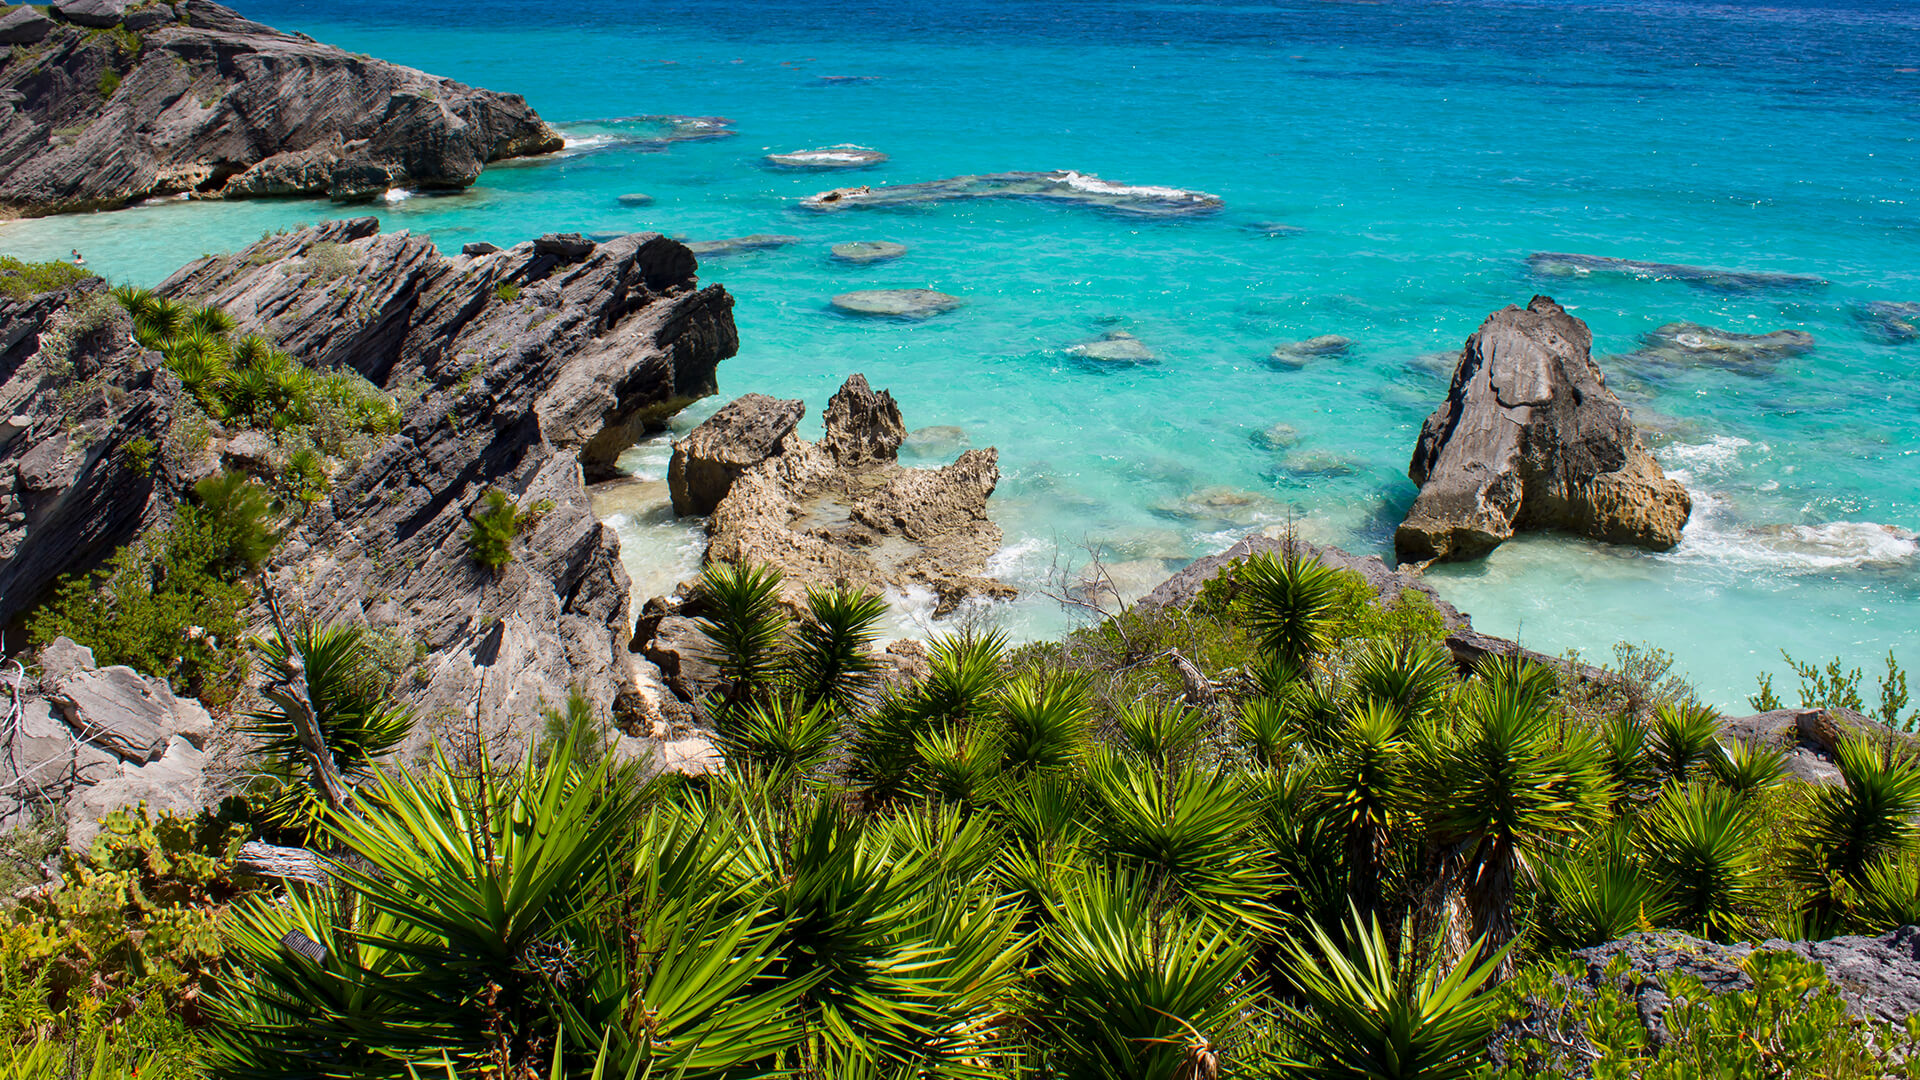 Rocky coast of Bermuda by Horseshoe Bay Beach and Wariwick Beach.